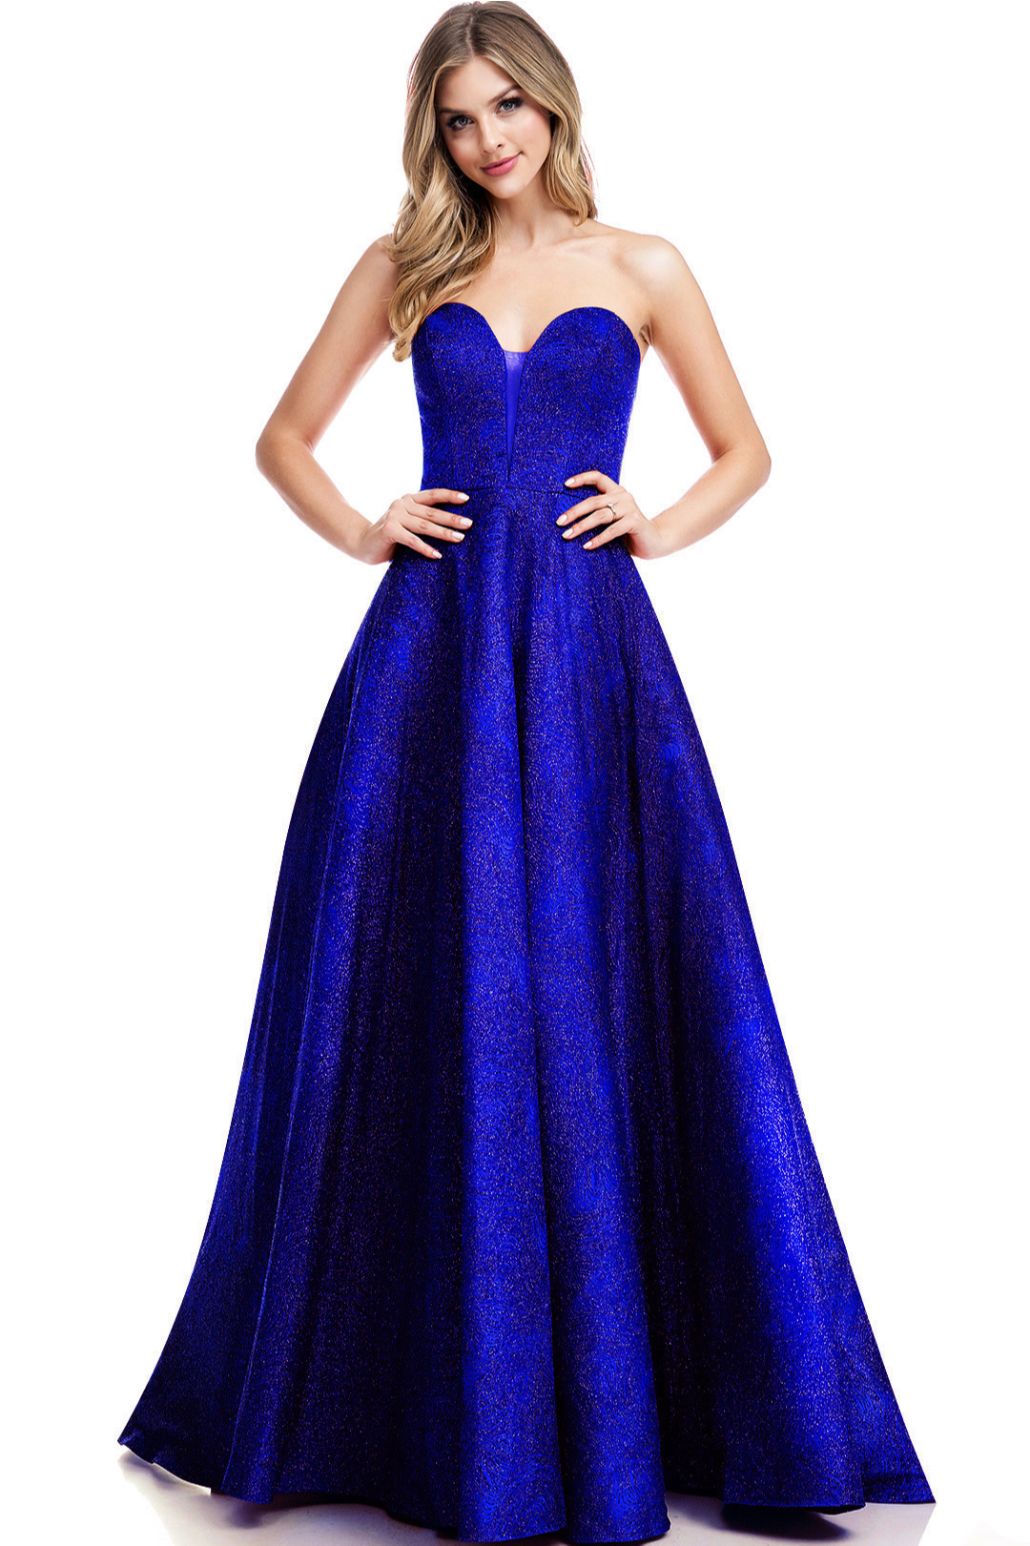 Prom Dress 2020 Corset Glitter Ball Gown Shangri La